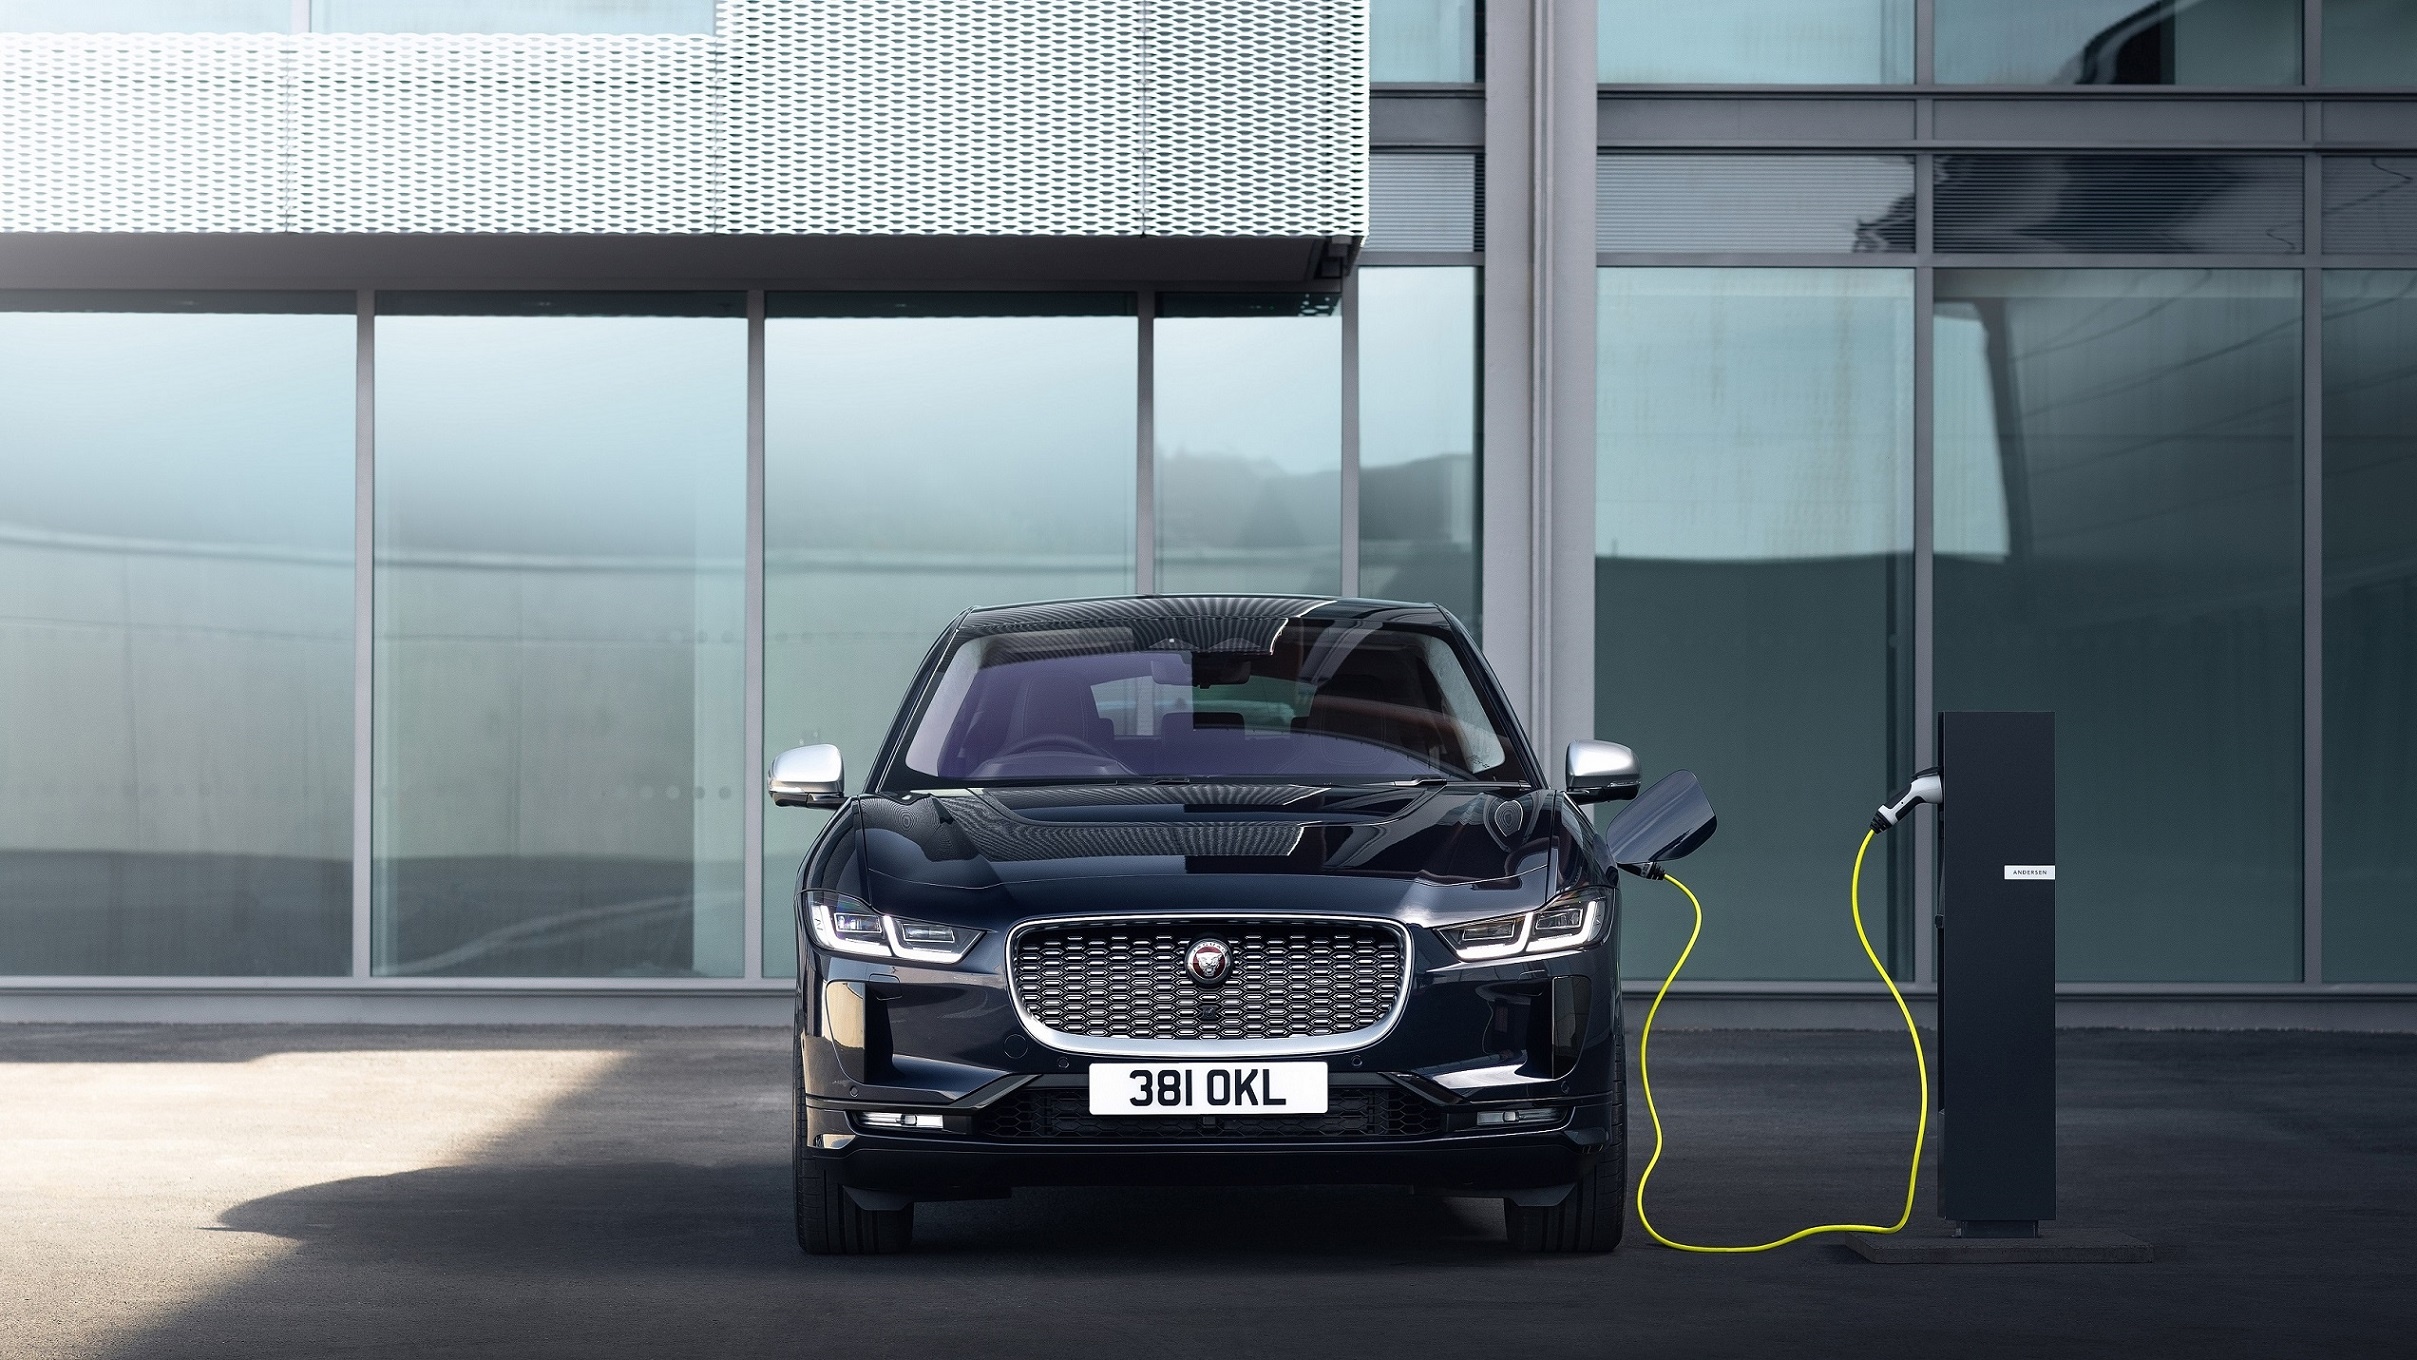 Jaguar land rover upcycles aluminium to cut carbon emissions by a quarter